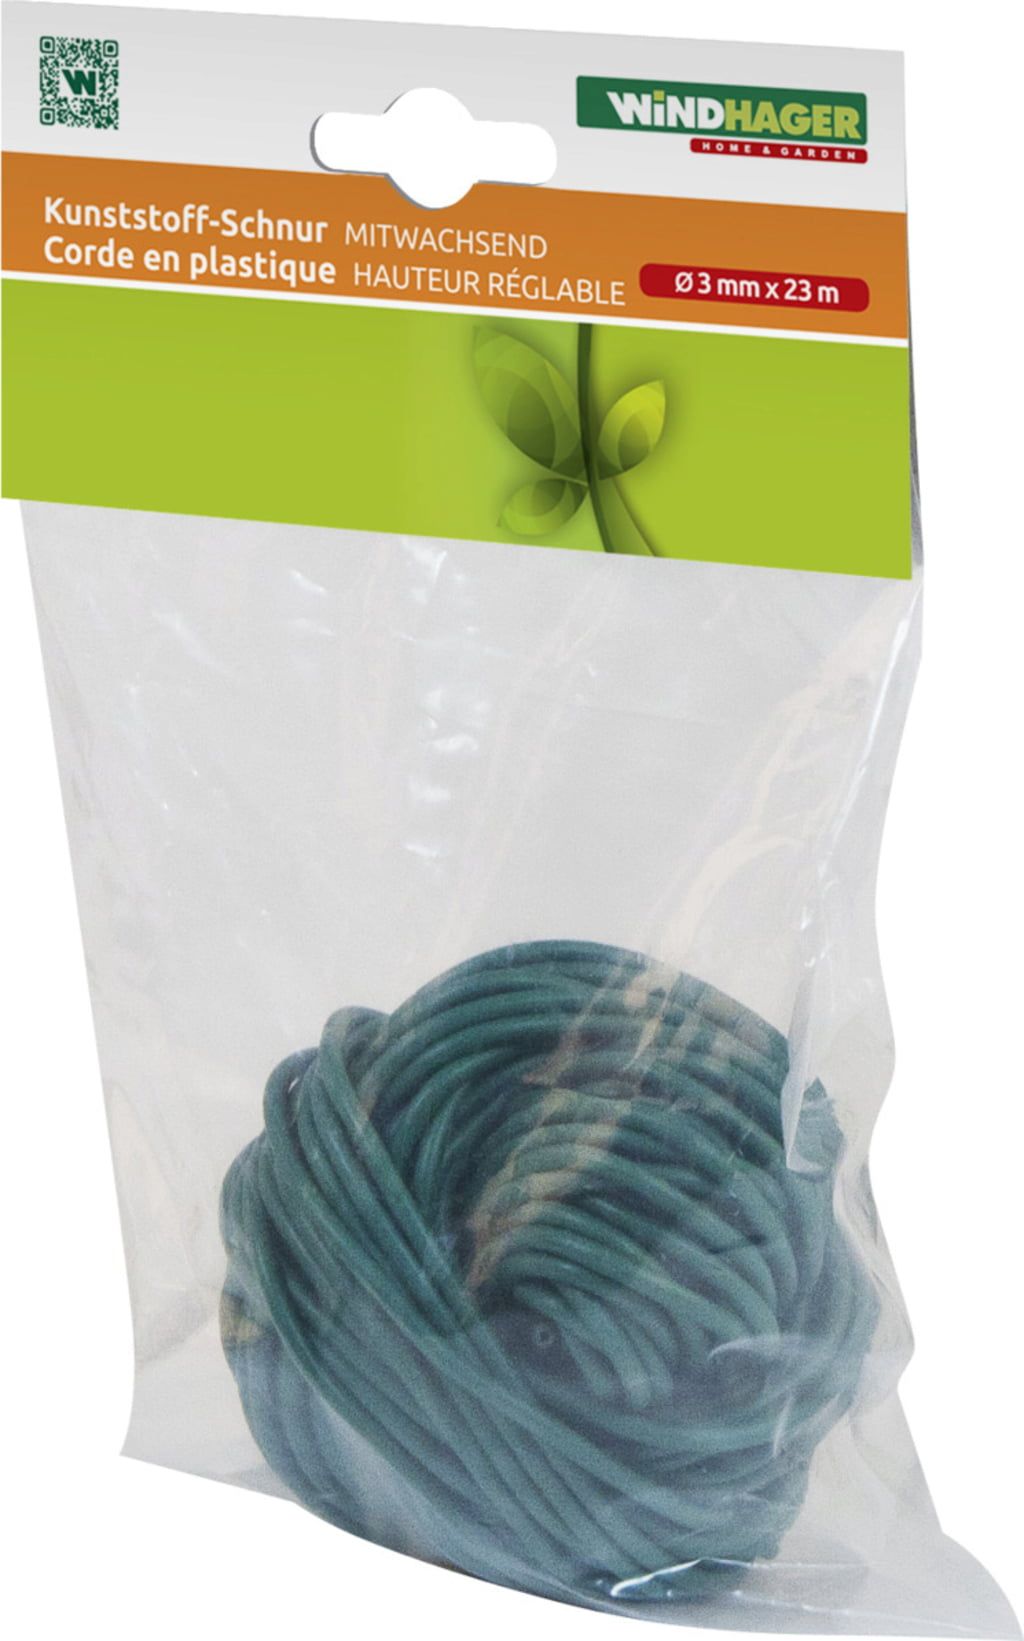 Windhager Plastic Cord, 1 Package - Bloomling International